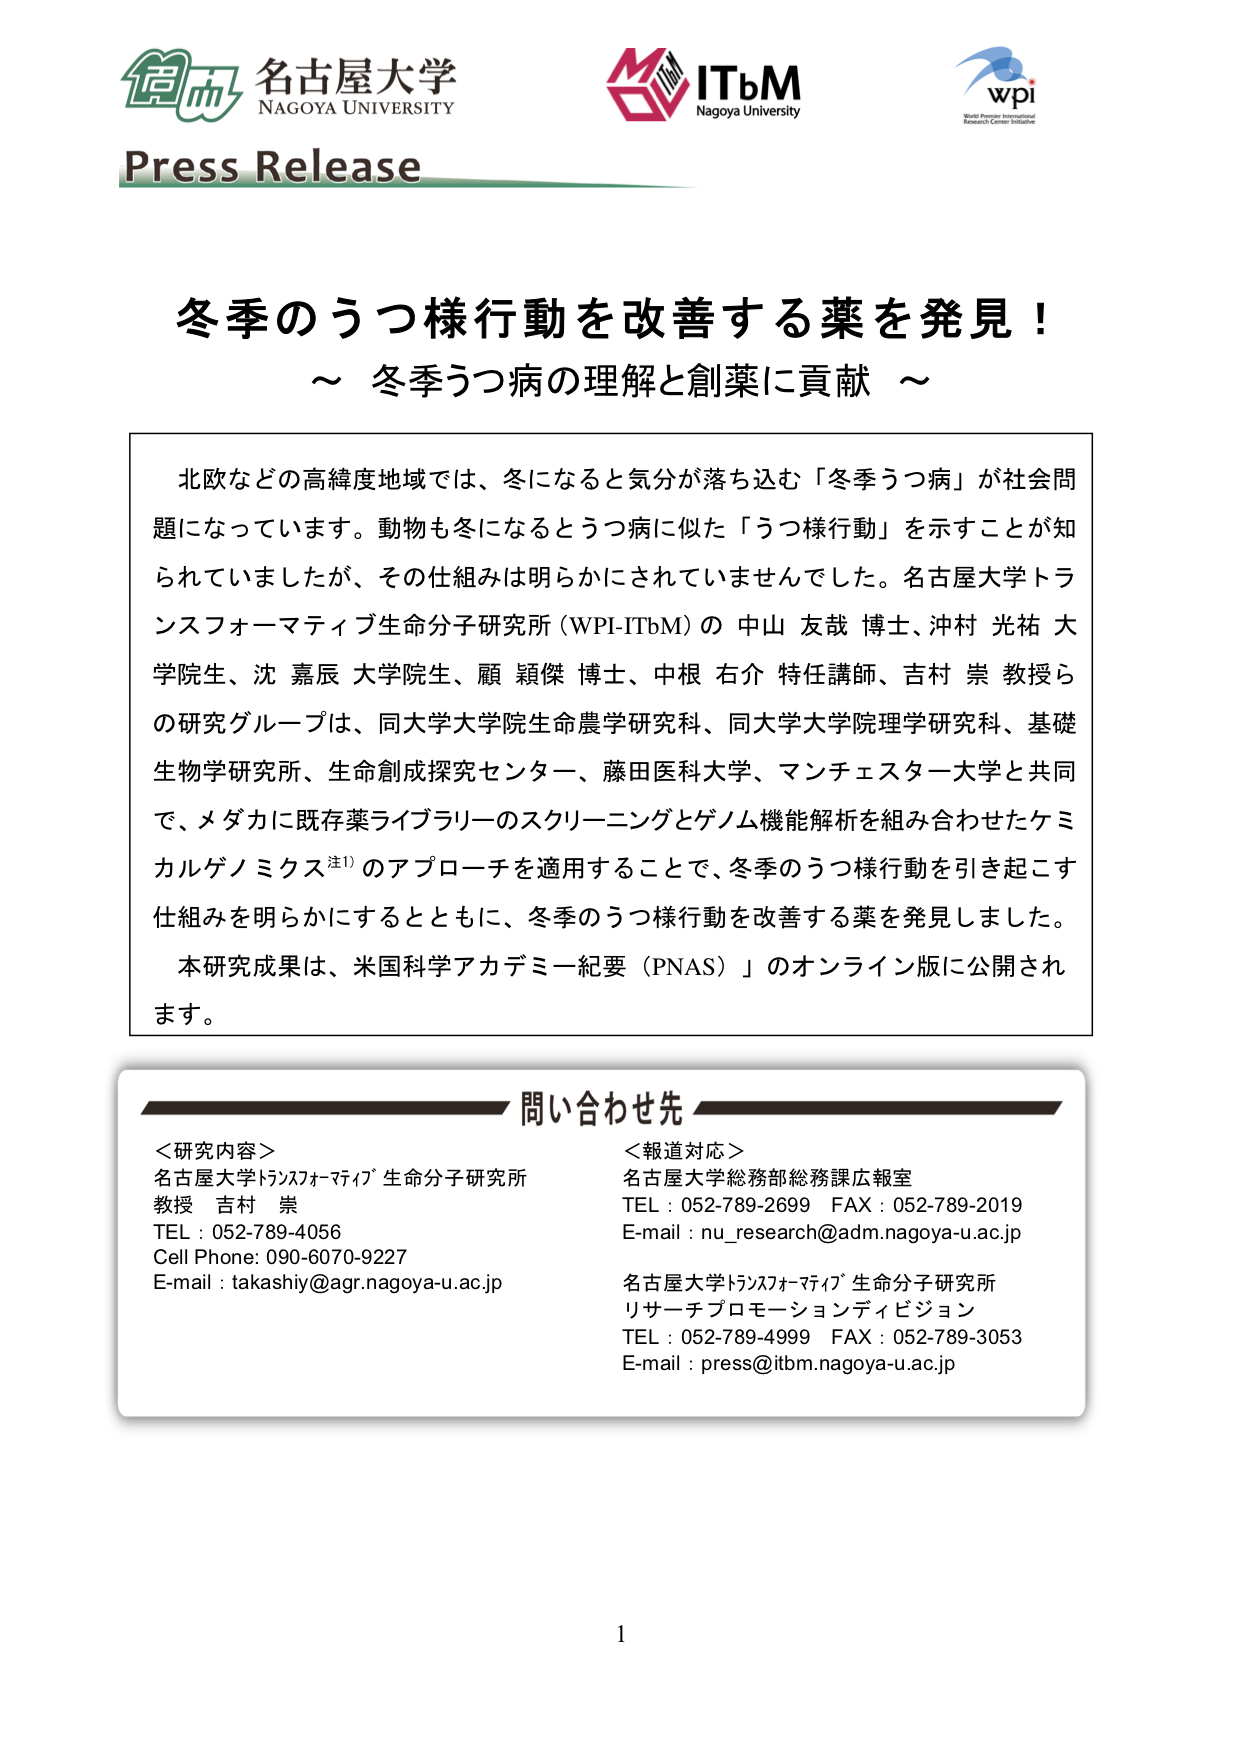 http://www.itbm.nagoya-u.ac.jp/ja_backup/research/20200403_press_yoshimura_HP.png